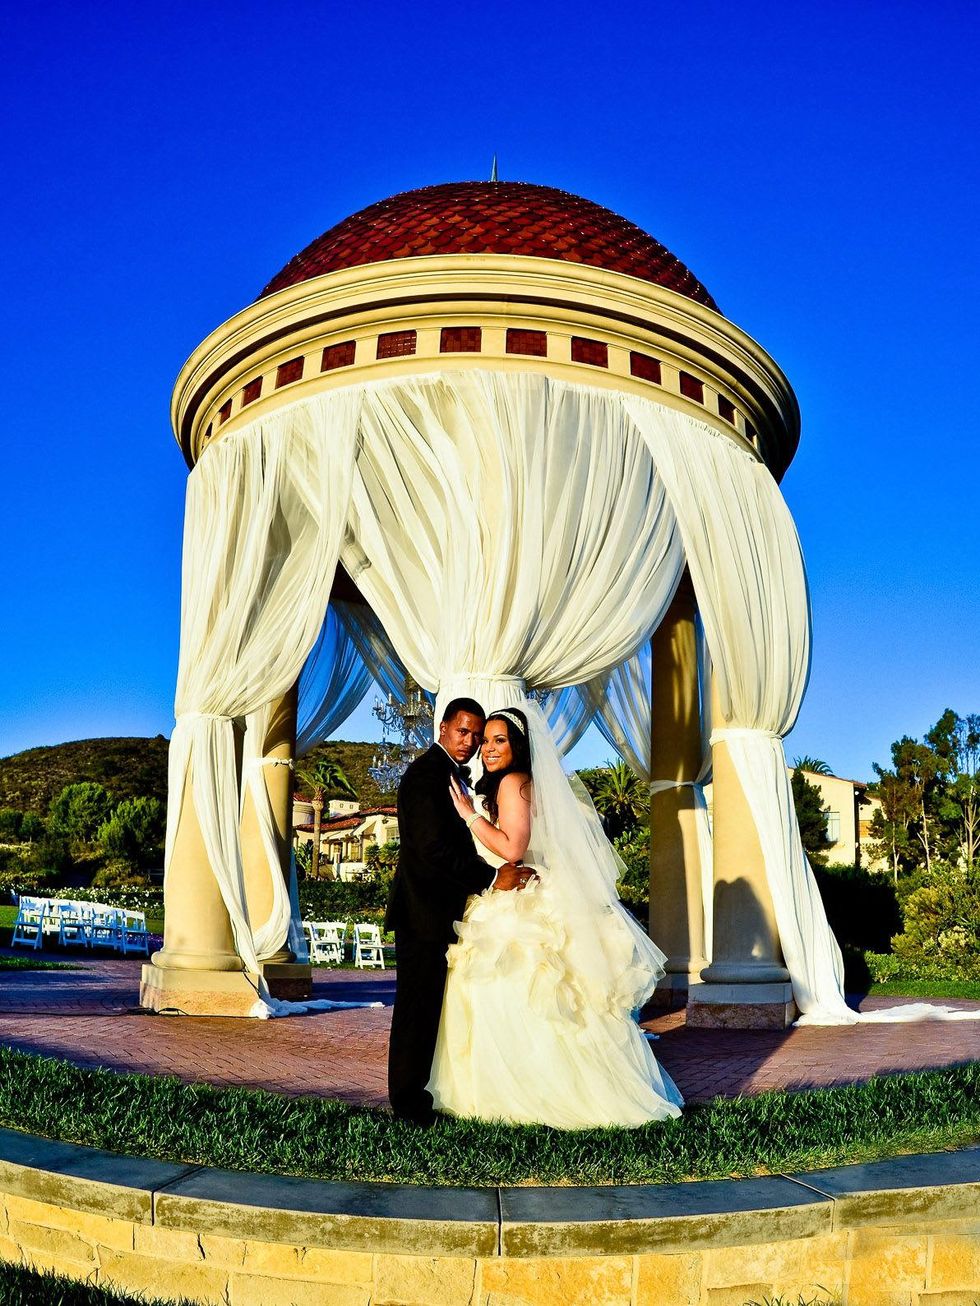 4, Wonderful Weddings, Lauren Randle and Jose Feliz, February 2013, Mr. and Mrs. Jose Feliz